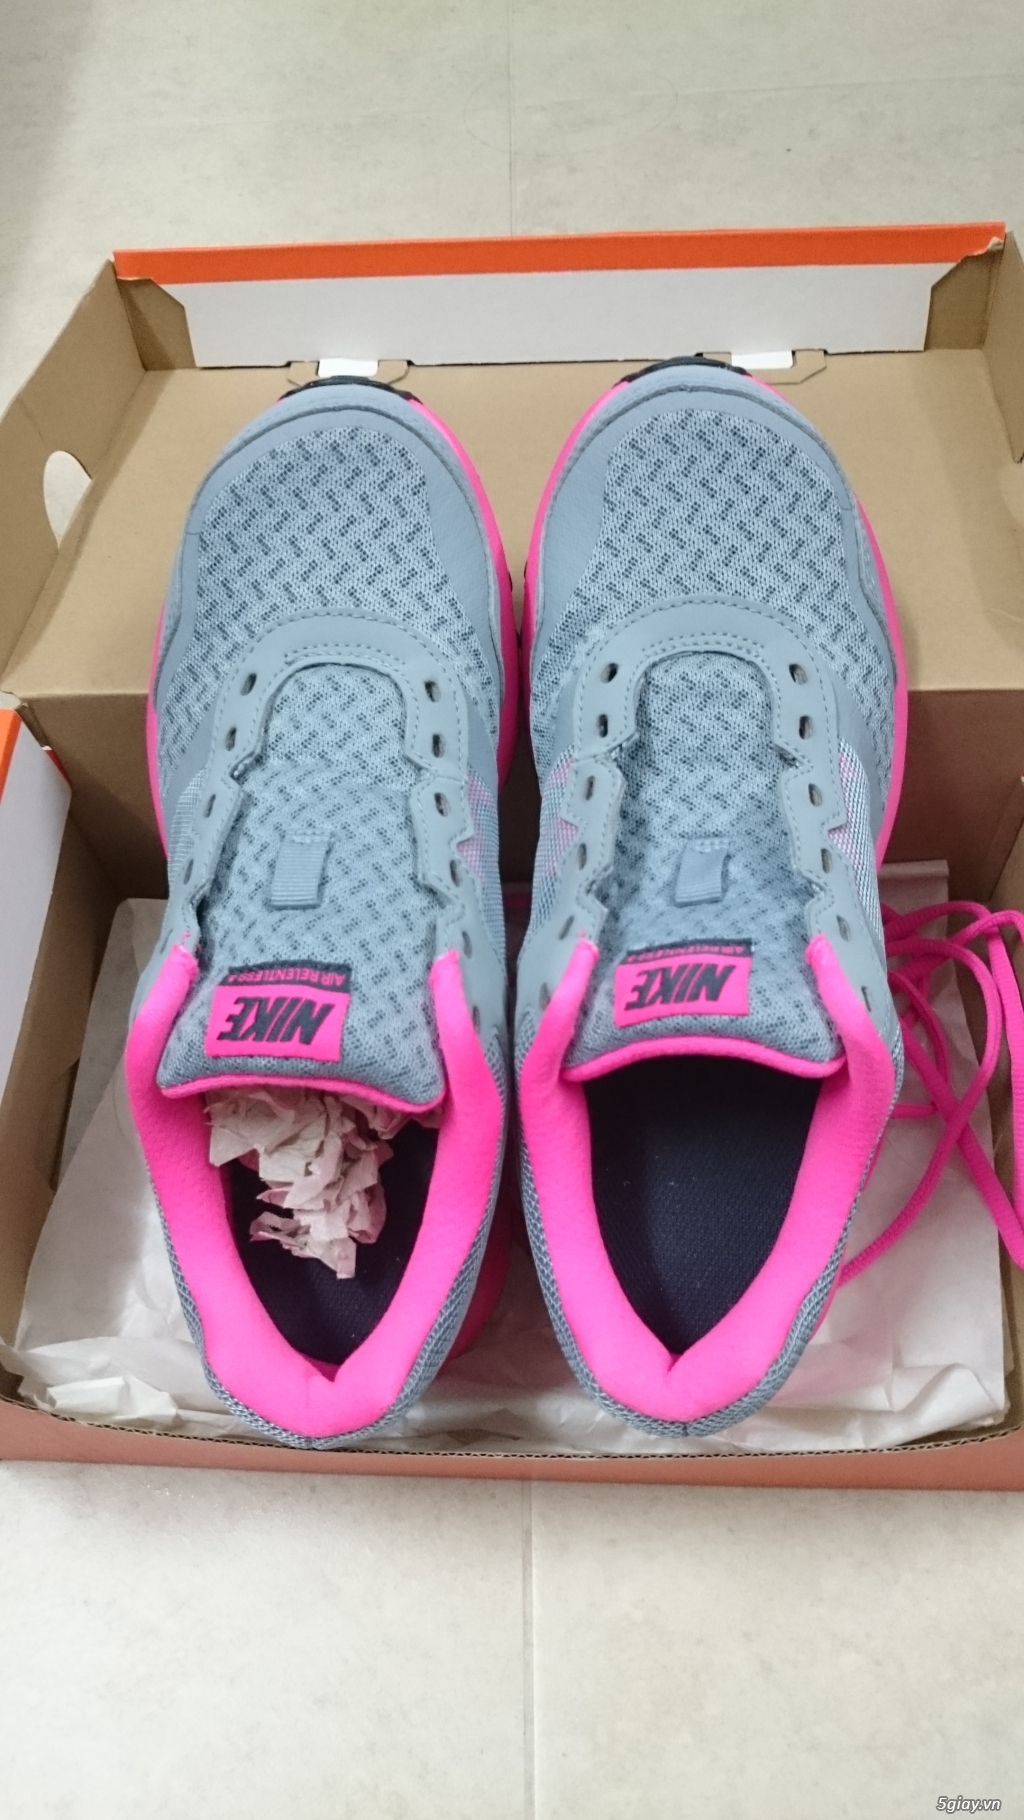 Giày Nike nữ Relentless 4 MSL size 7 (US) - 38 - mới 100% - 2